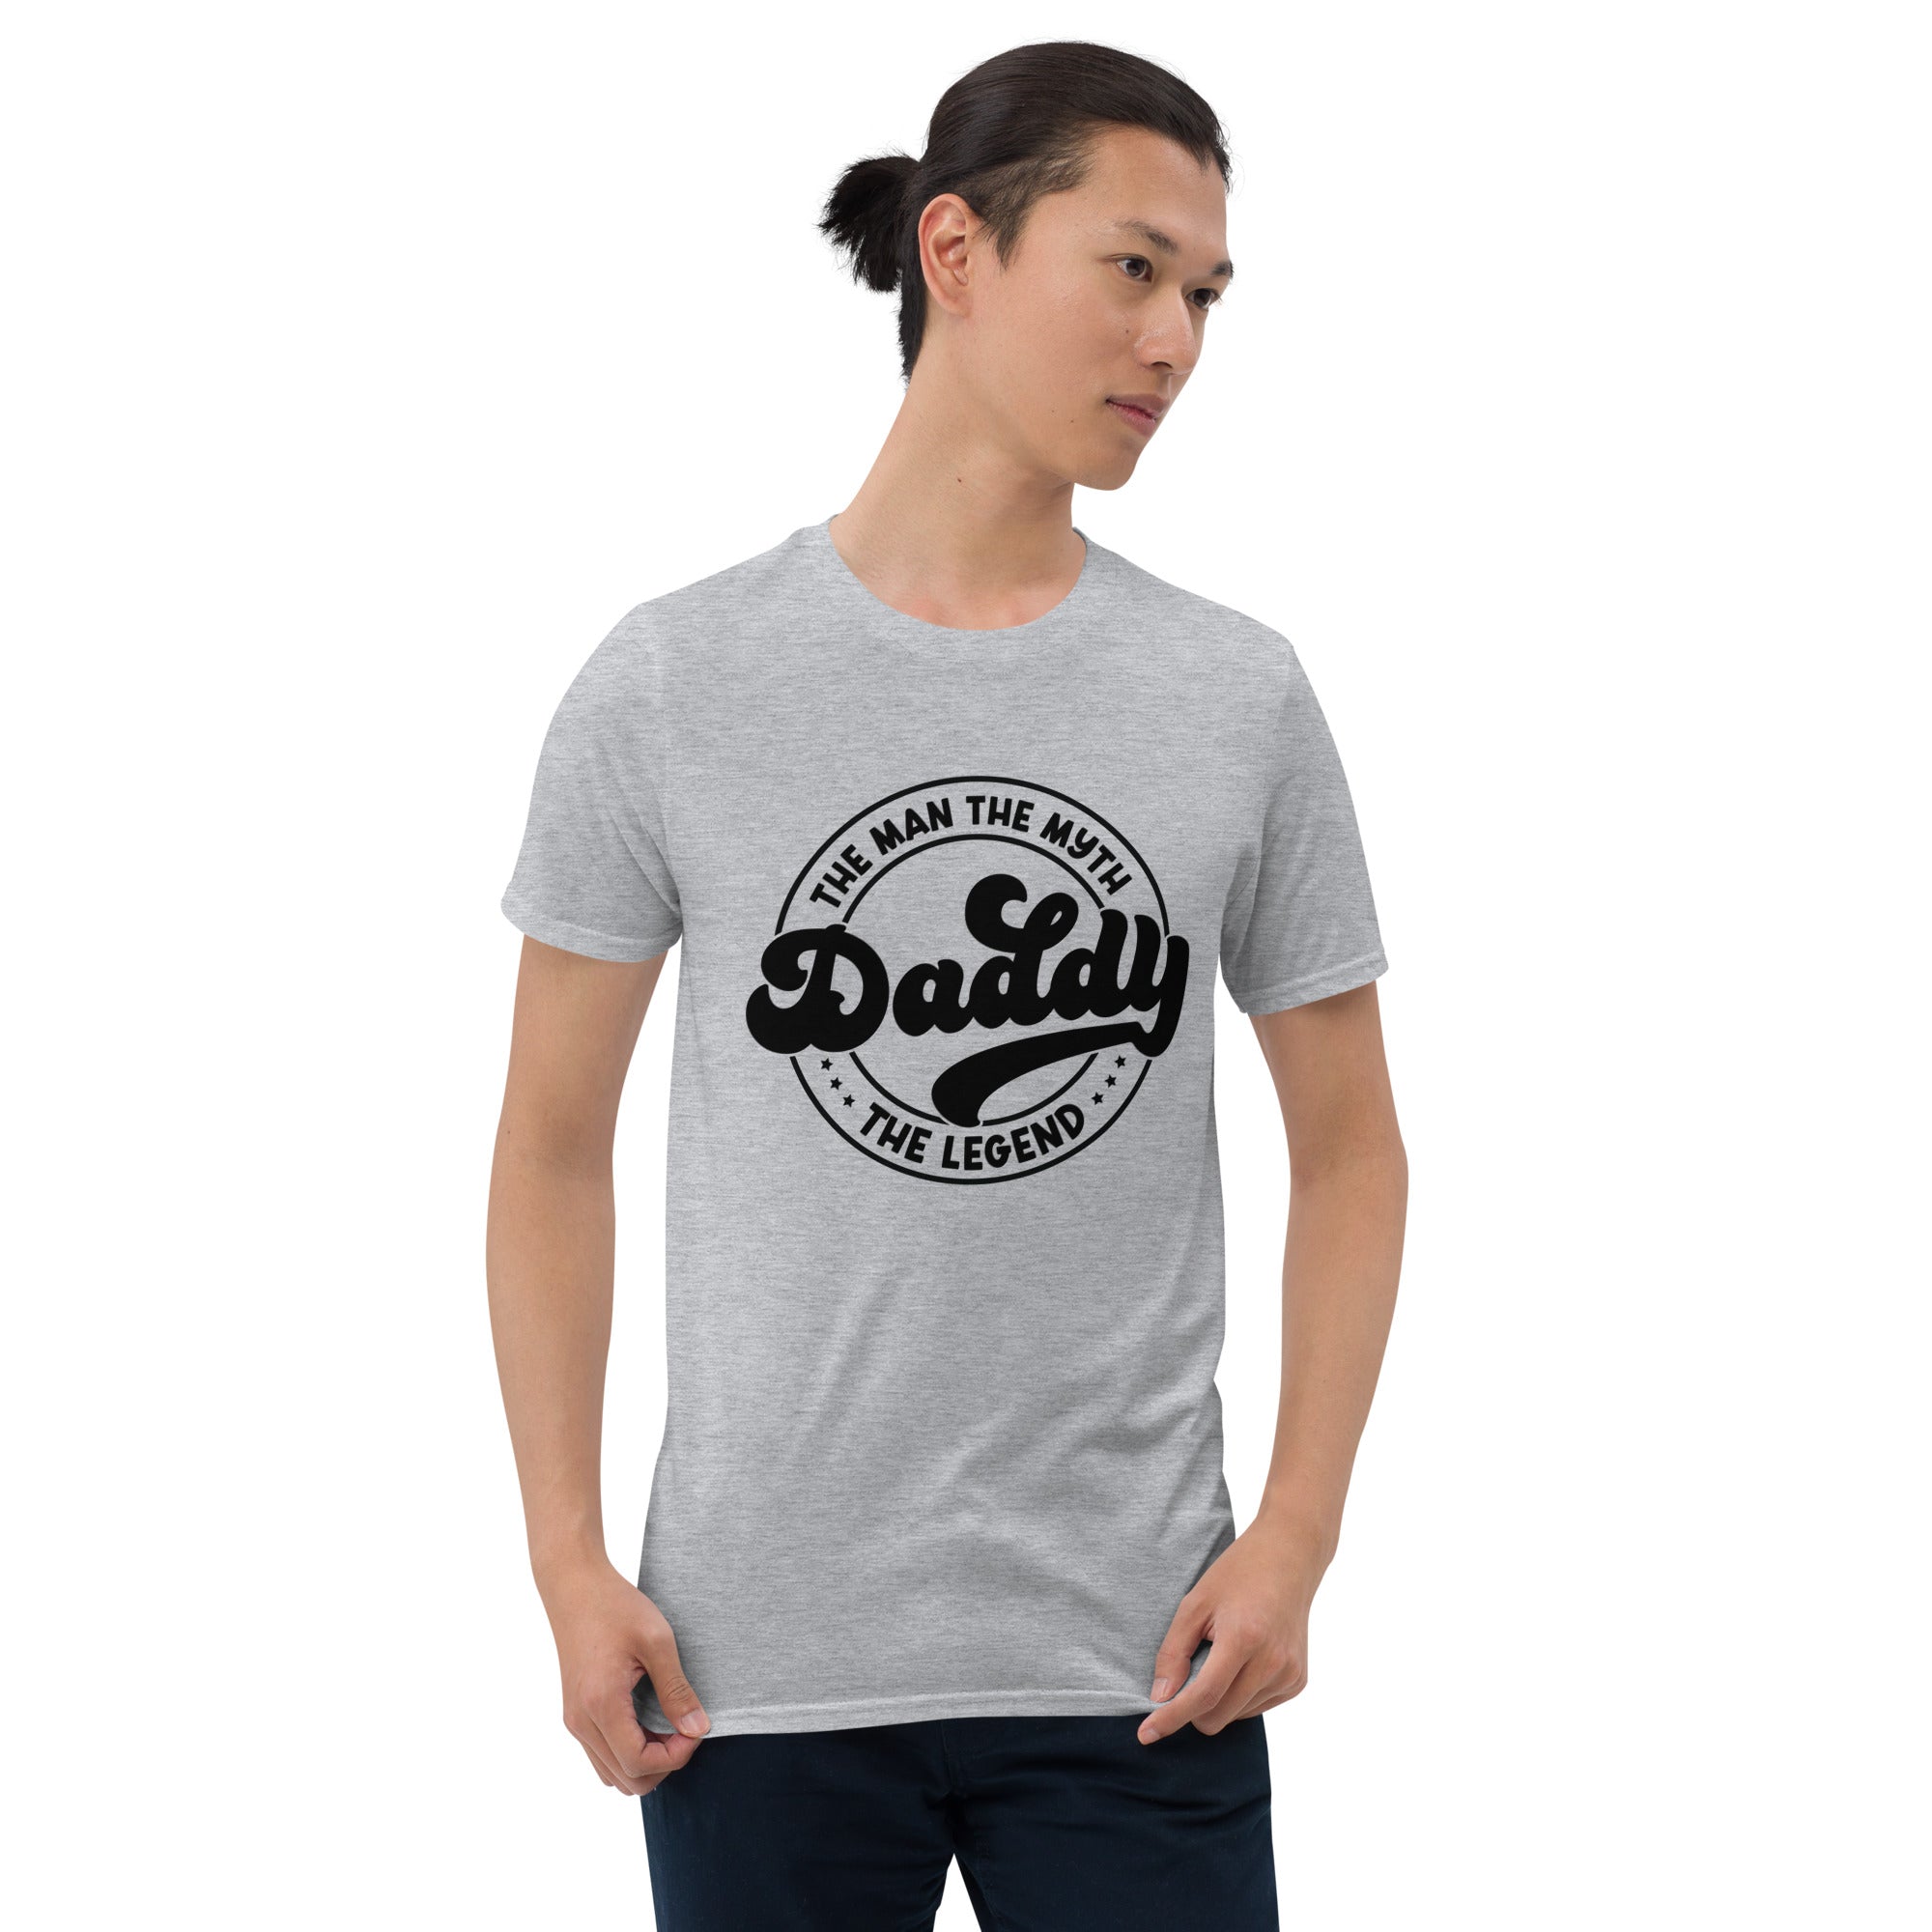 Daddy - Short-Sleeve Unisex T-Shirt